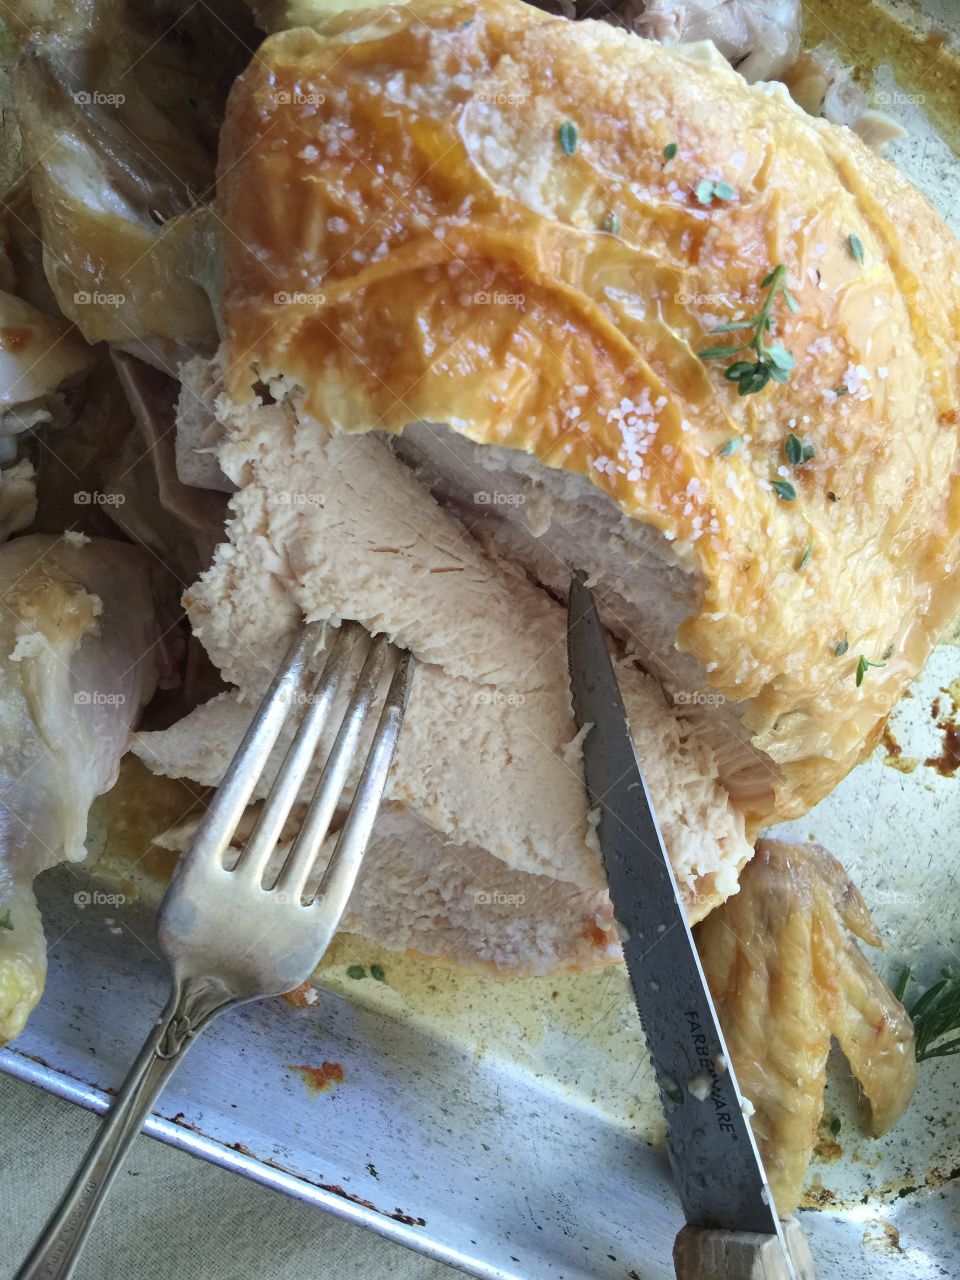 Carving roast chicken